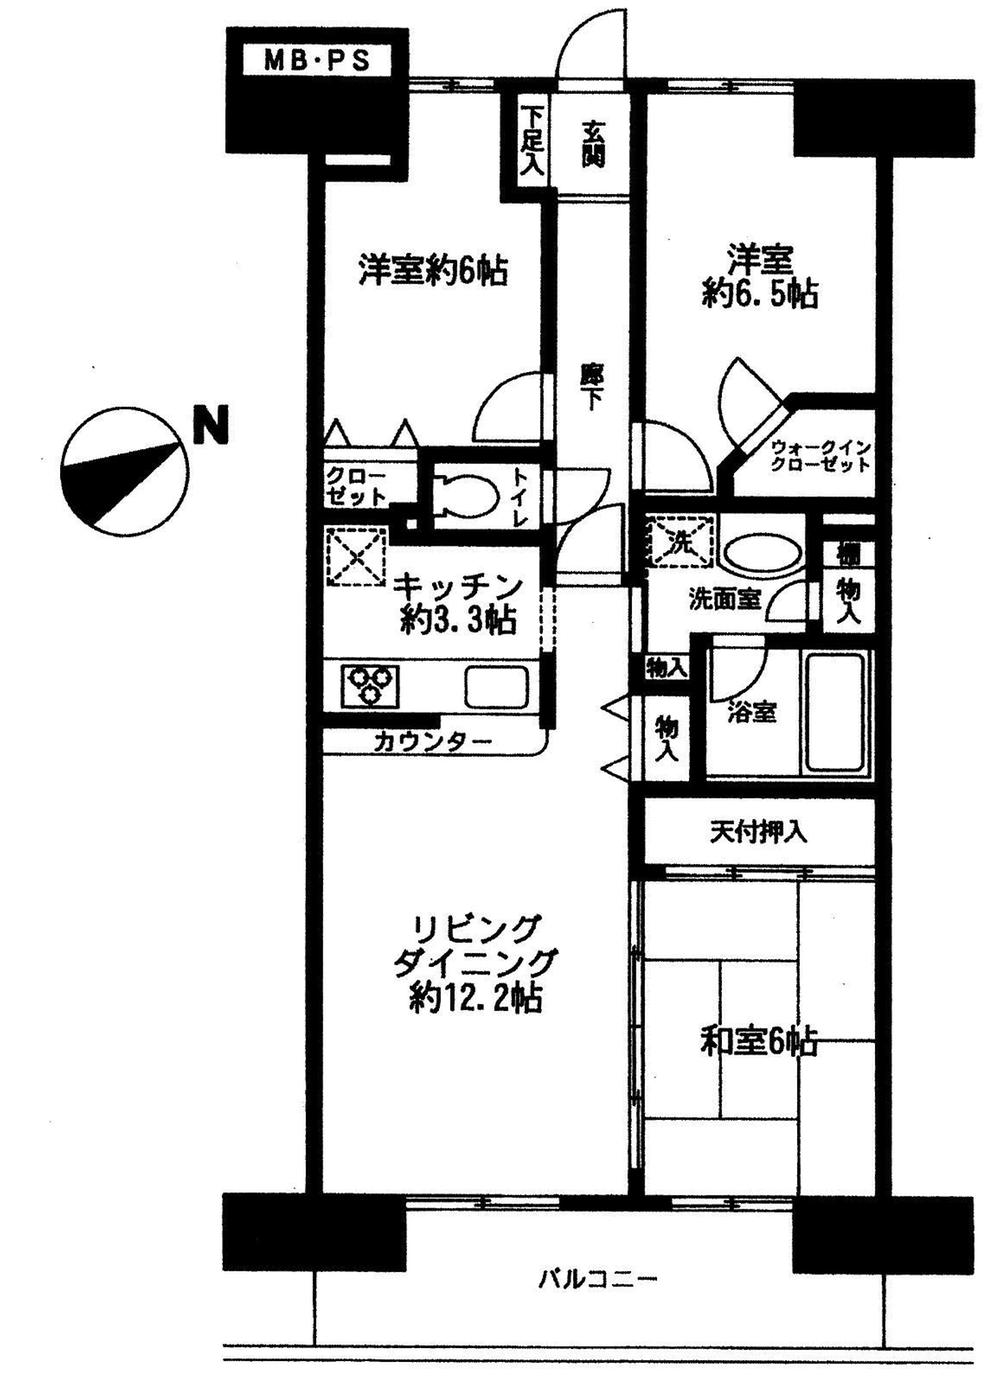 Floor plan. 3LDK, Price 24,800,000 yen, Occupied area 75.45 sq m , Balcony area 9.92 sq m